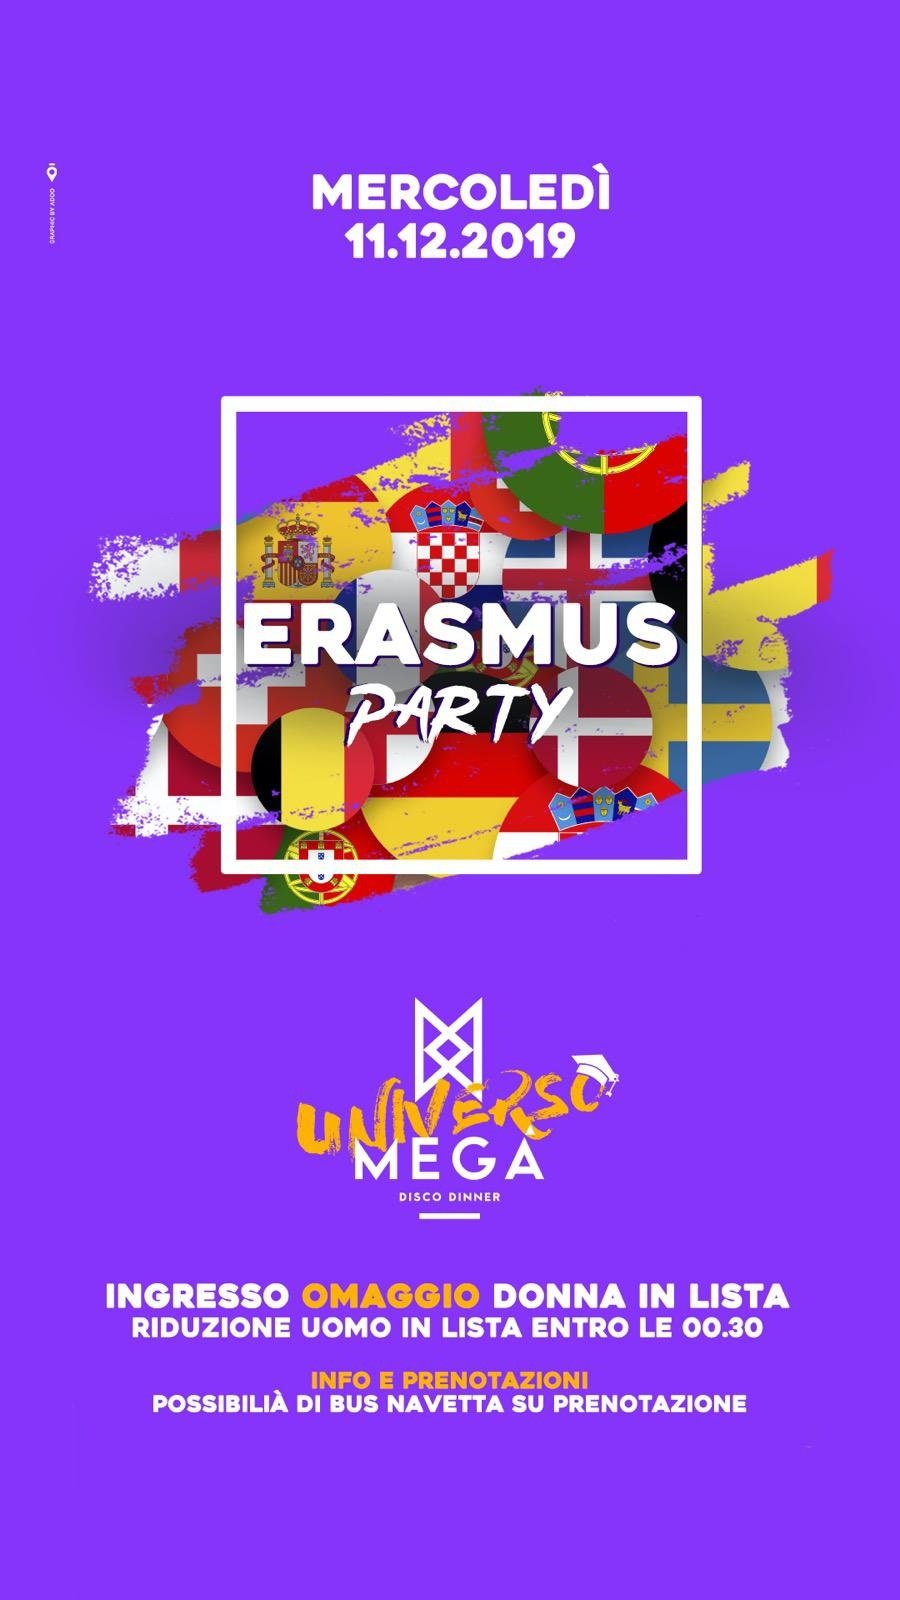 Erasmus Party Megà Pescara